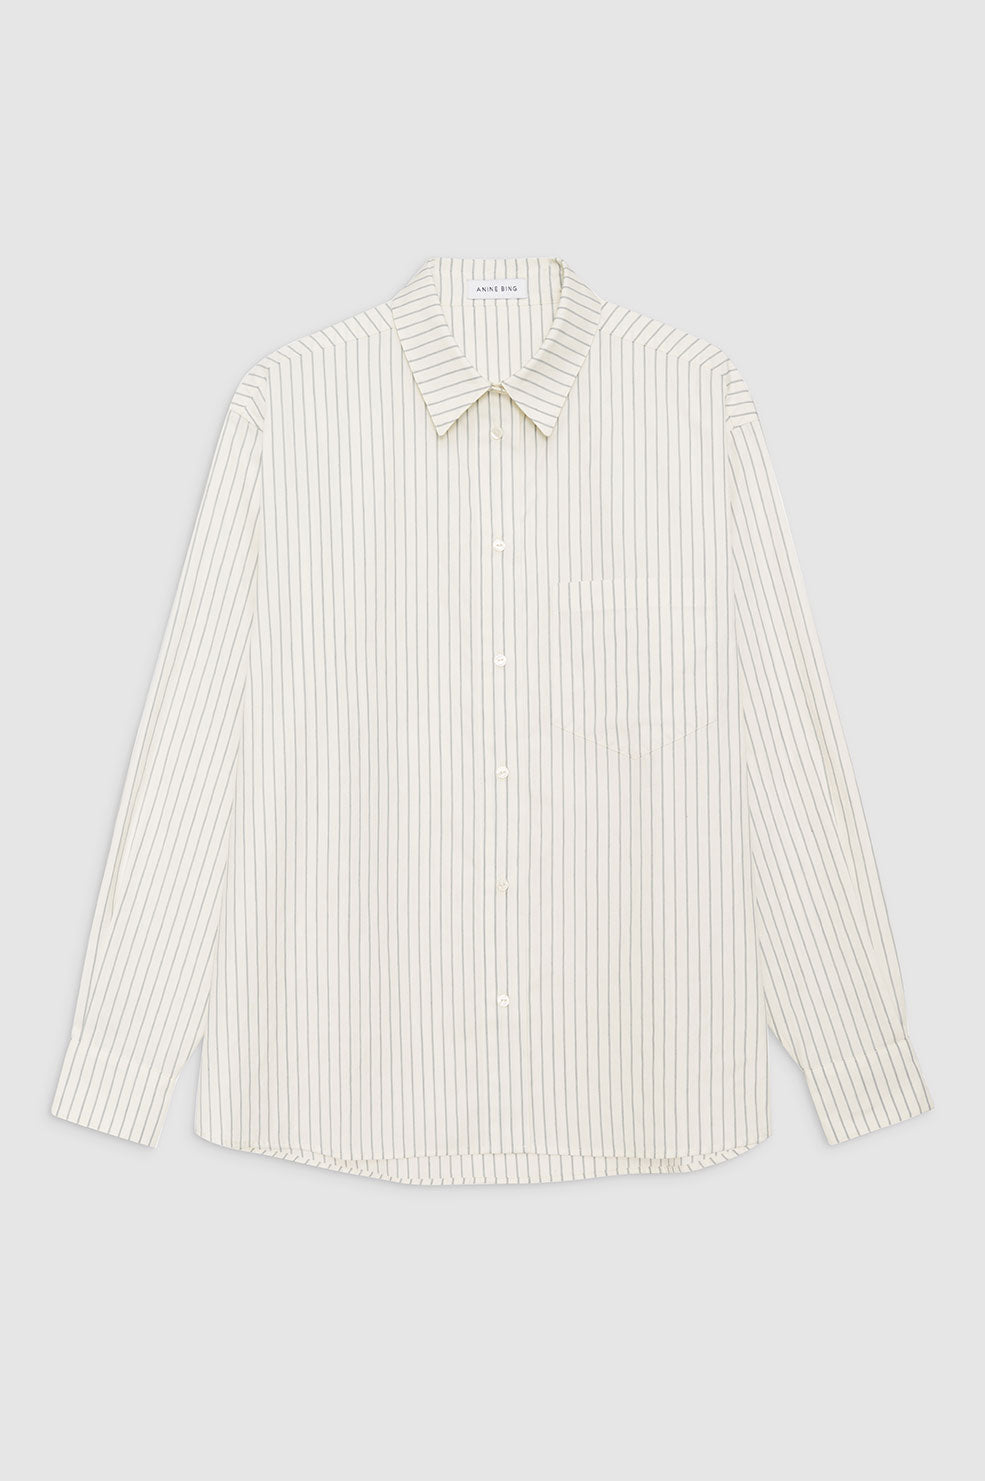 ANINE BING Braxton Shirt - Ivory And Blue Monogram Stripe - Front View